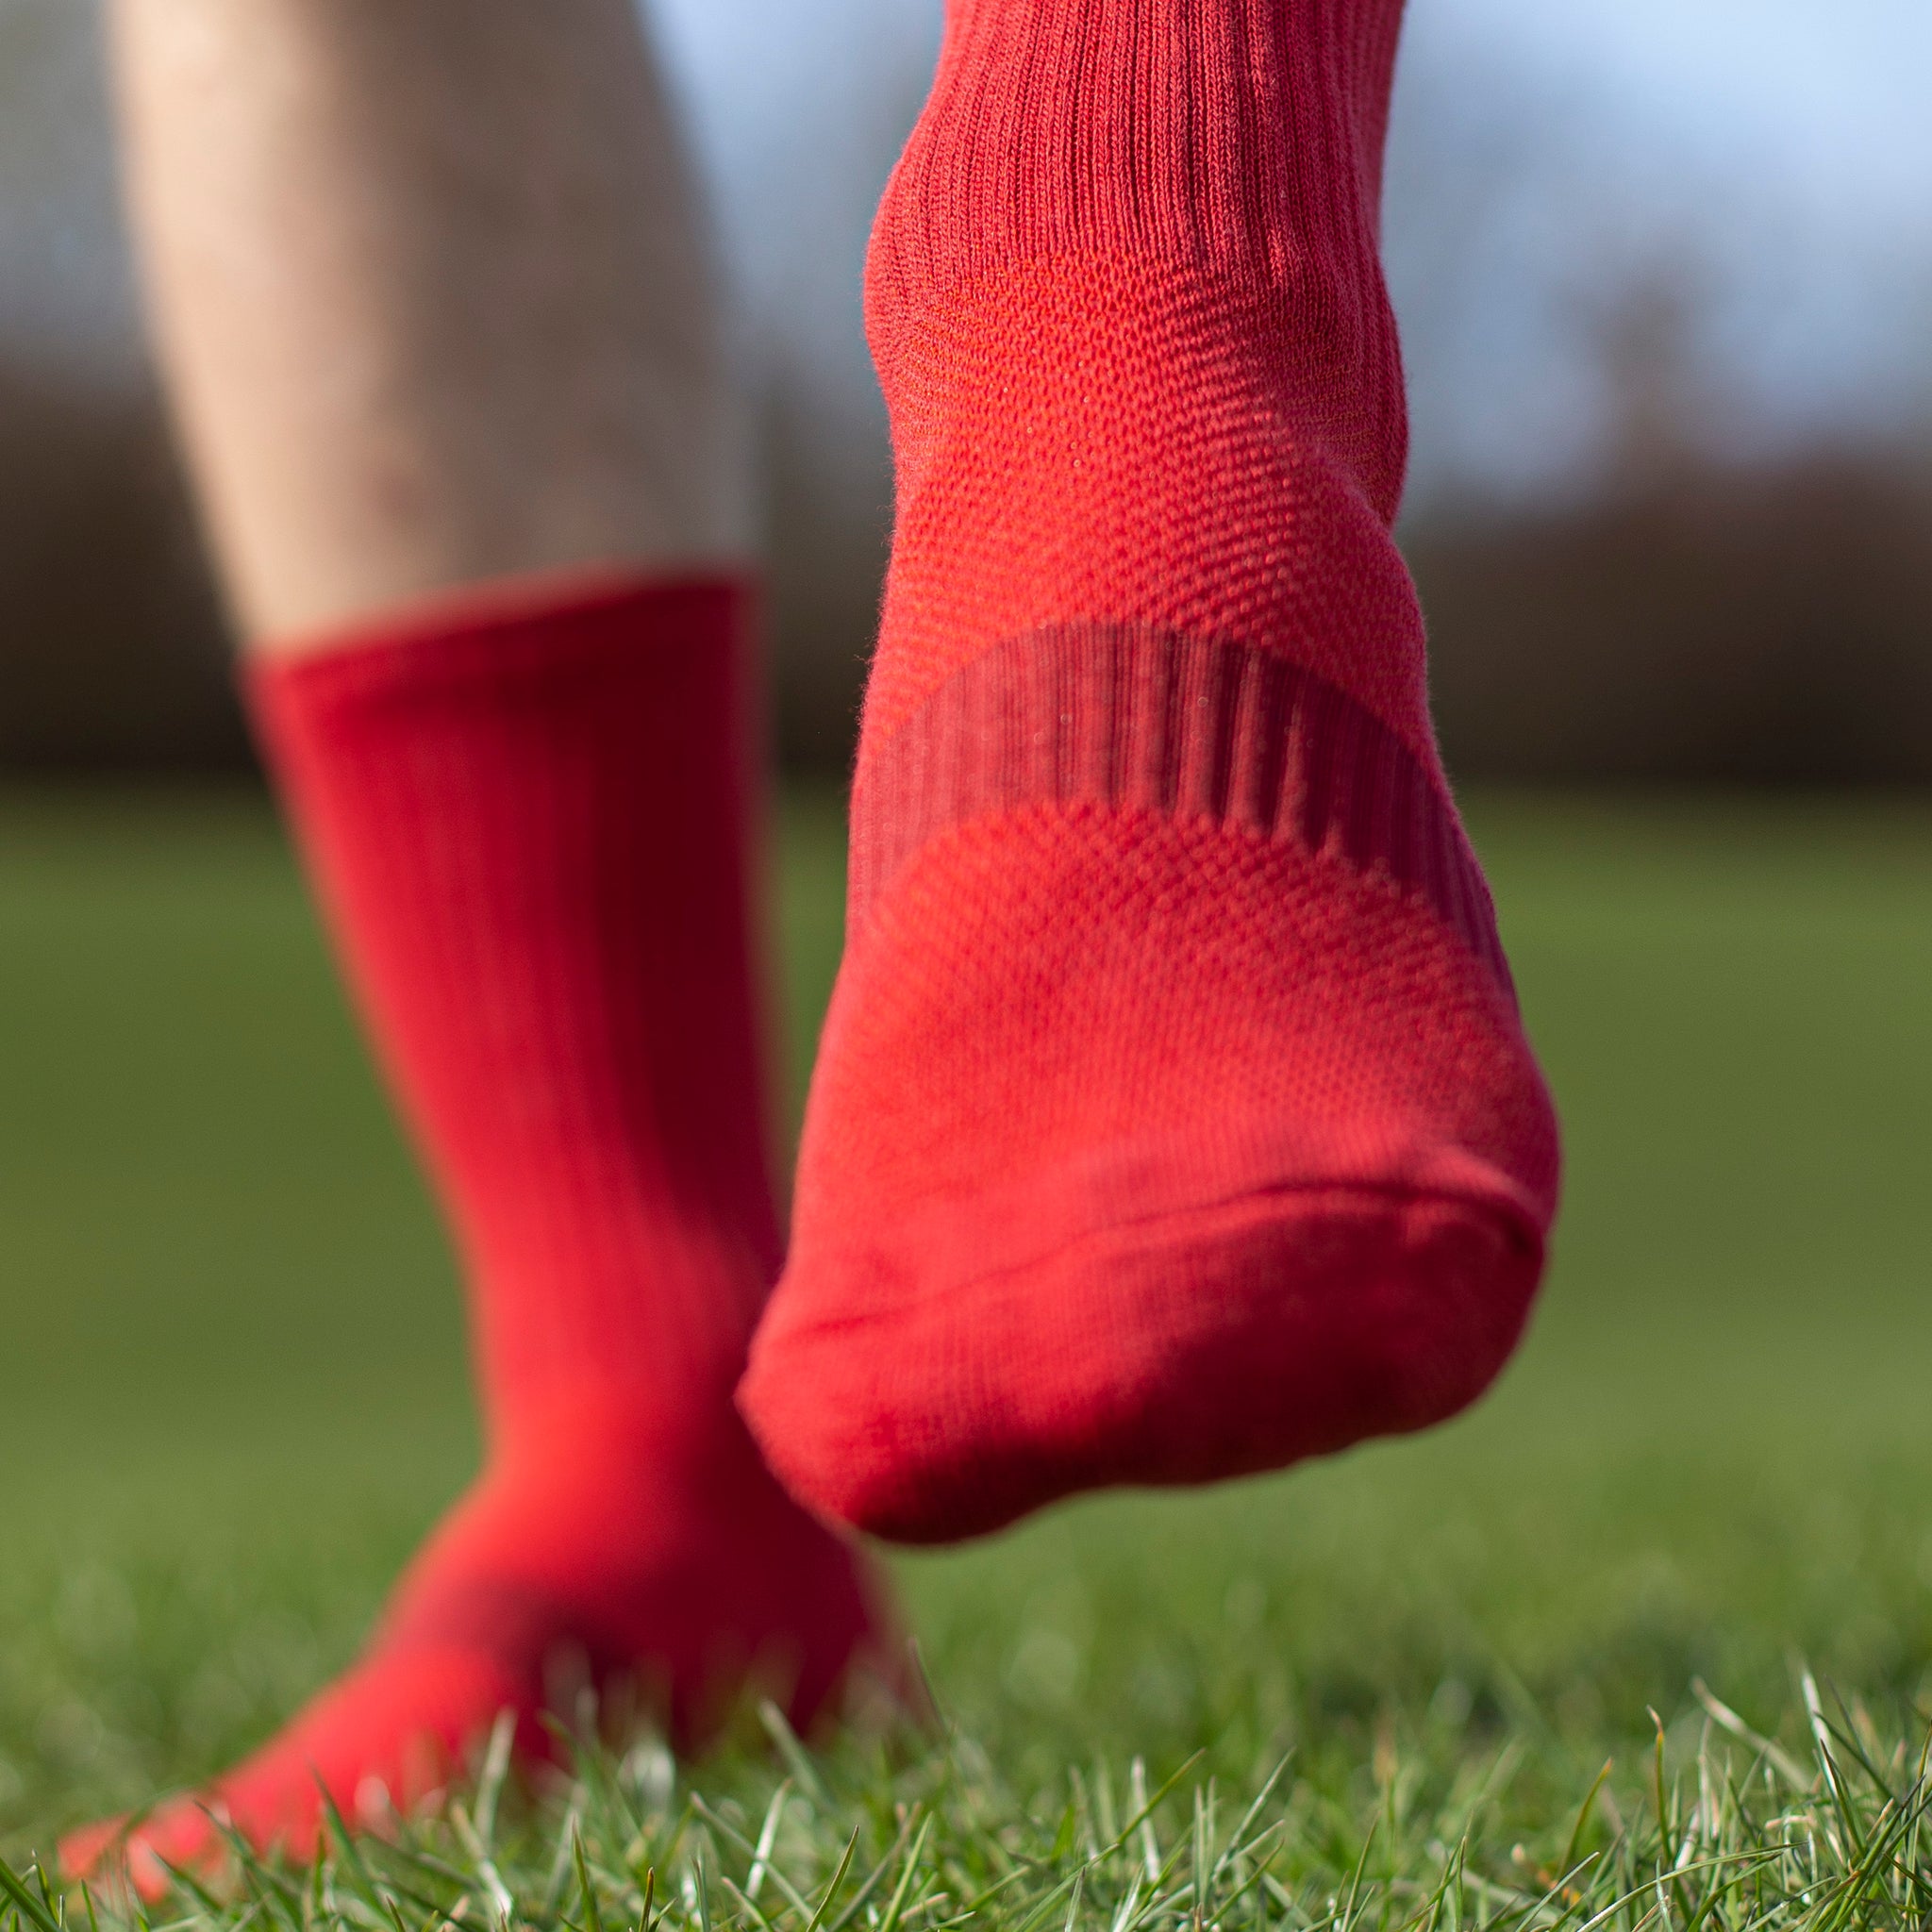 Red and Black Grip Socks – GRIPTEC